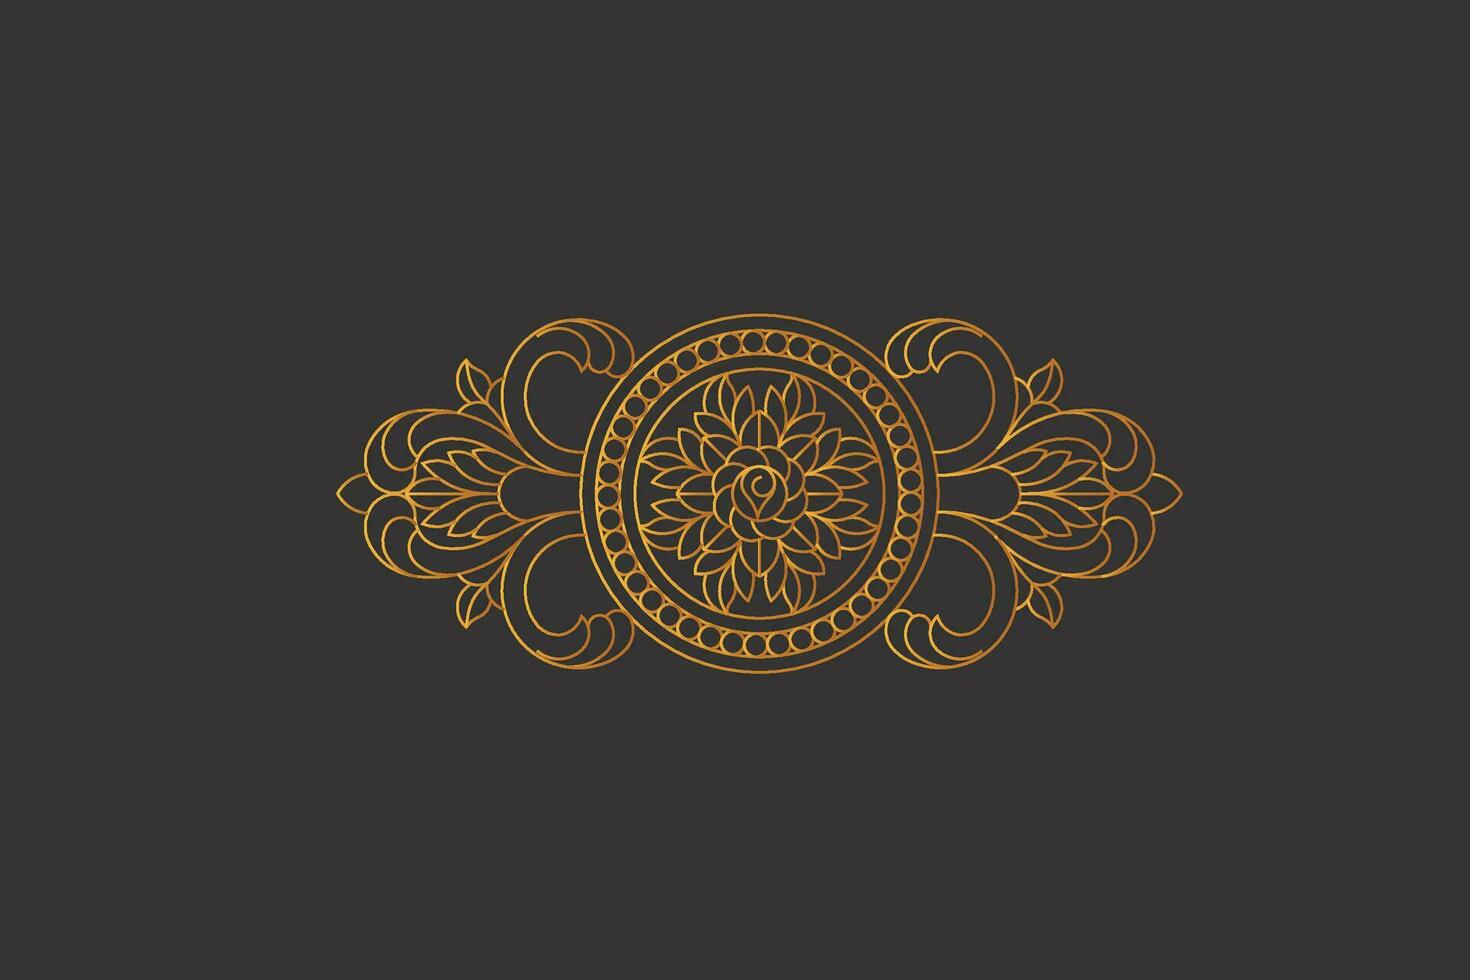 Premium Gold Mandala Vector Art Pattern Design